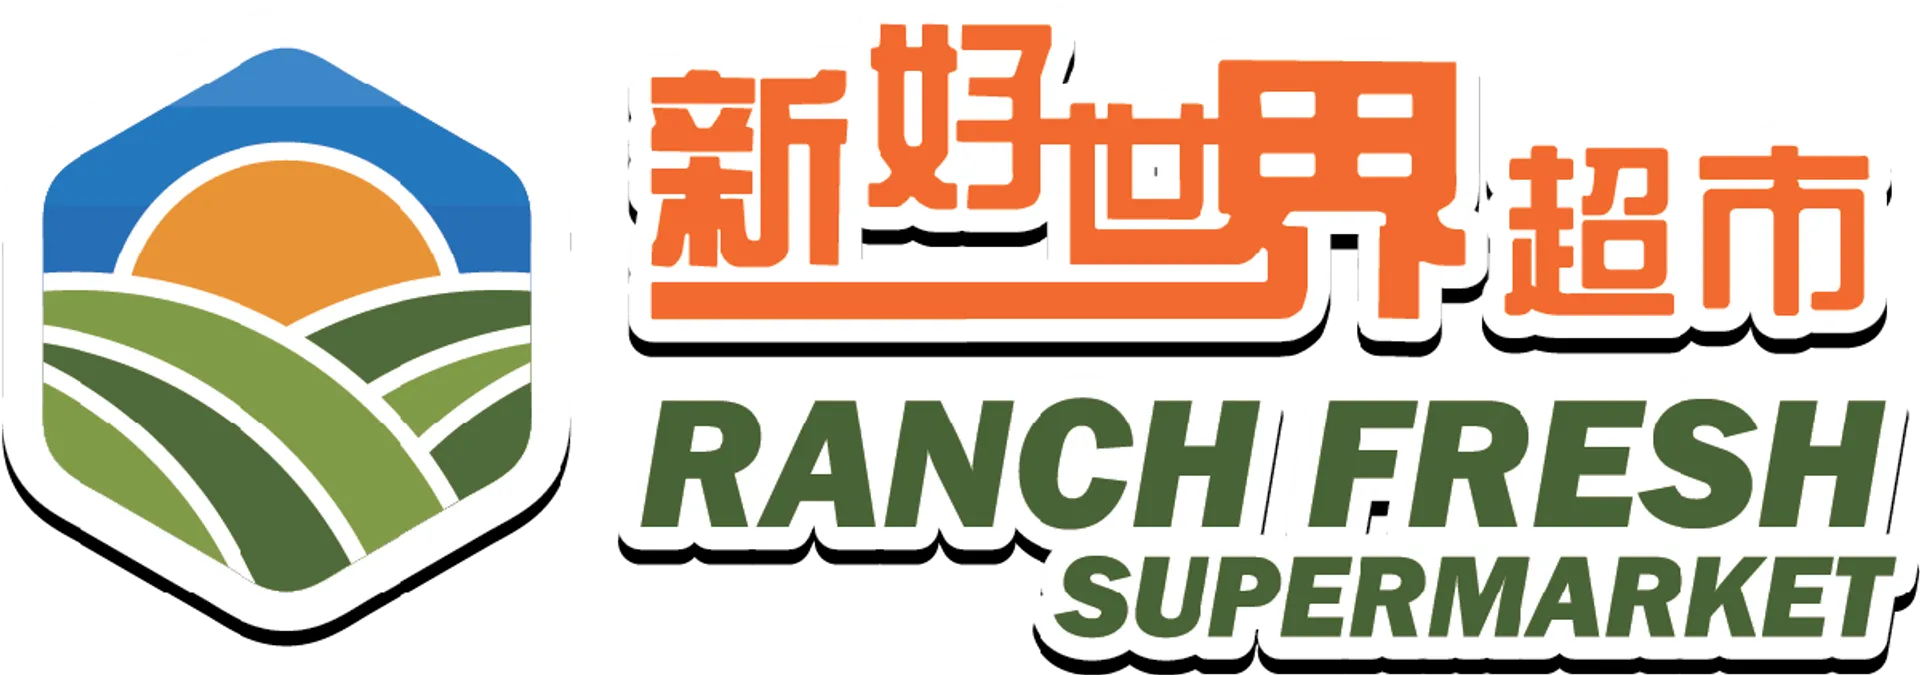 RANCH FRESH SUPERMARKET logo